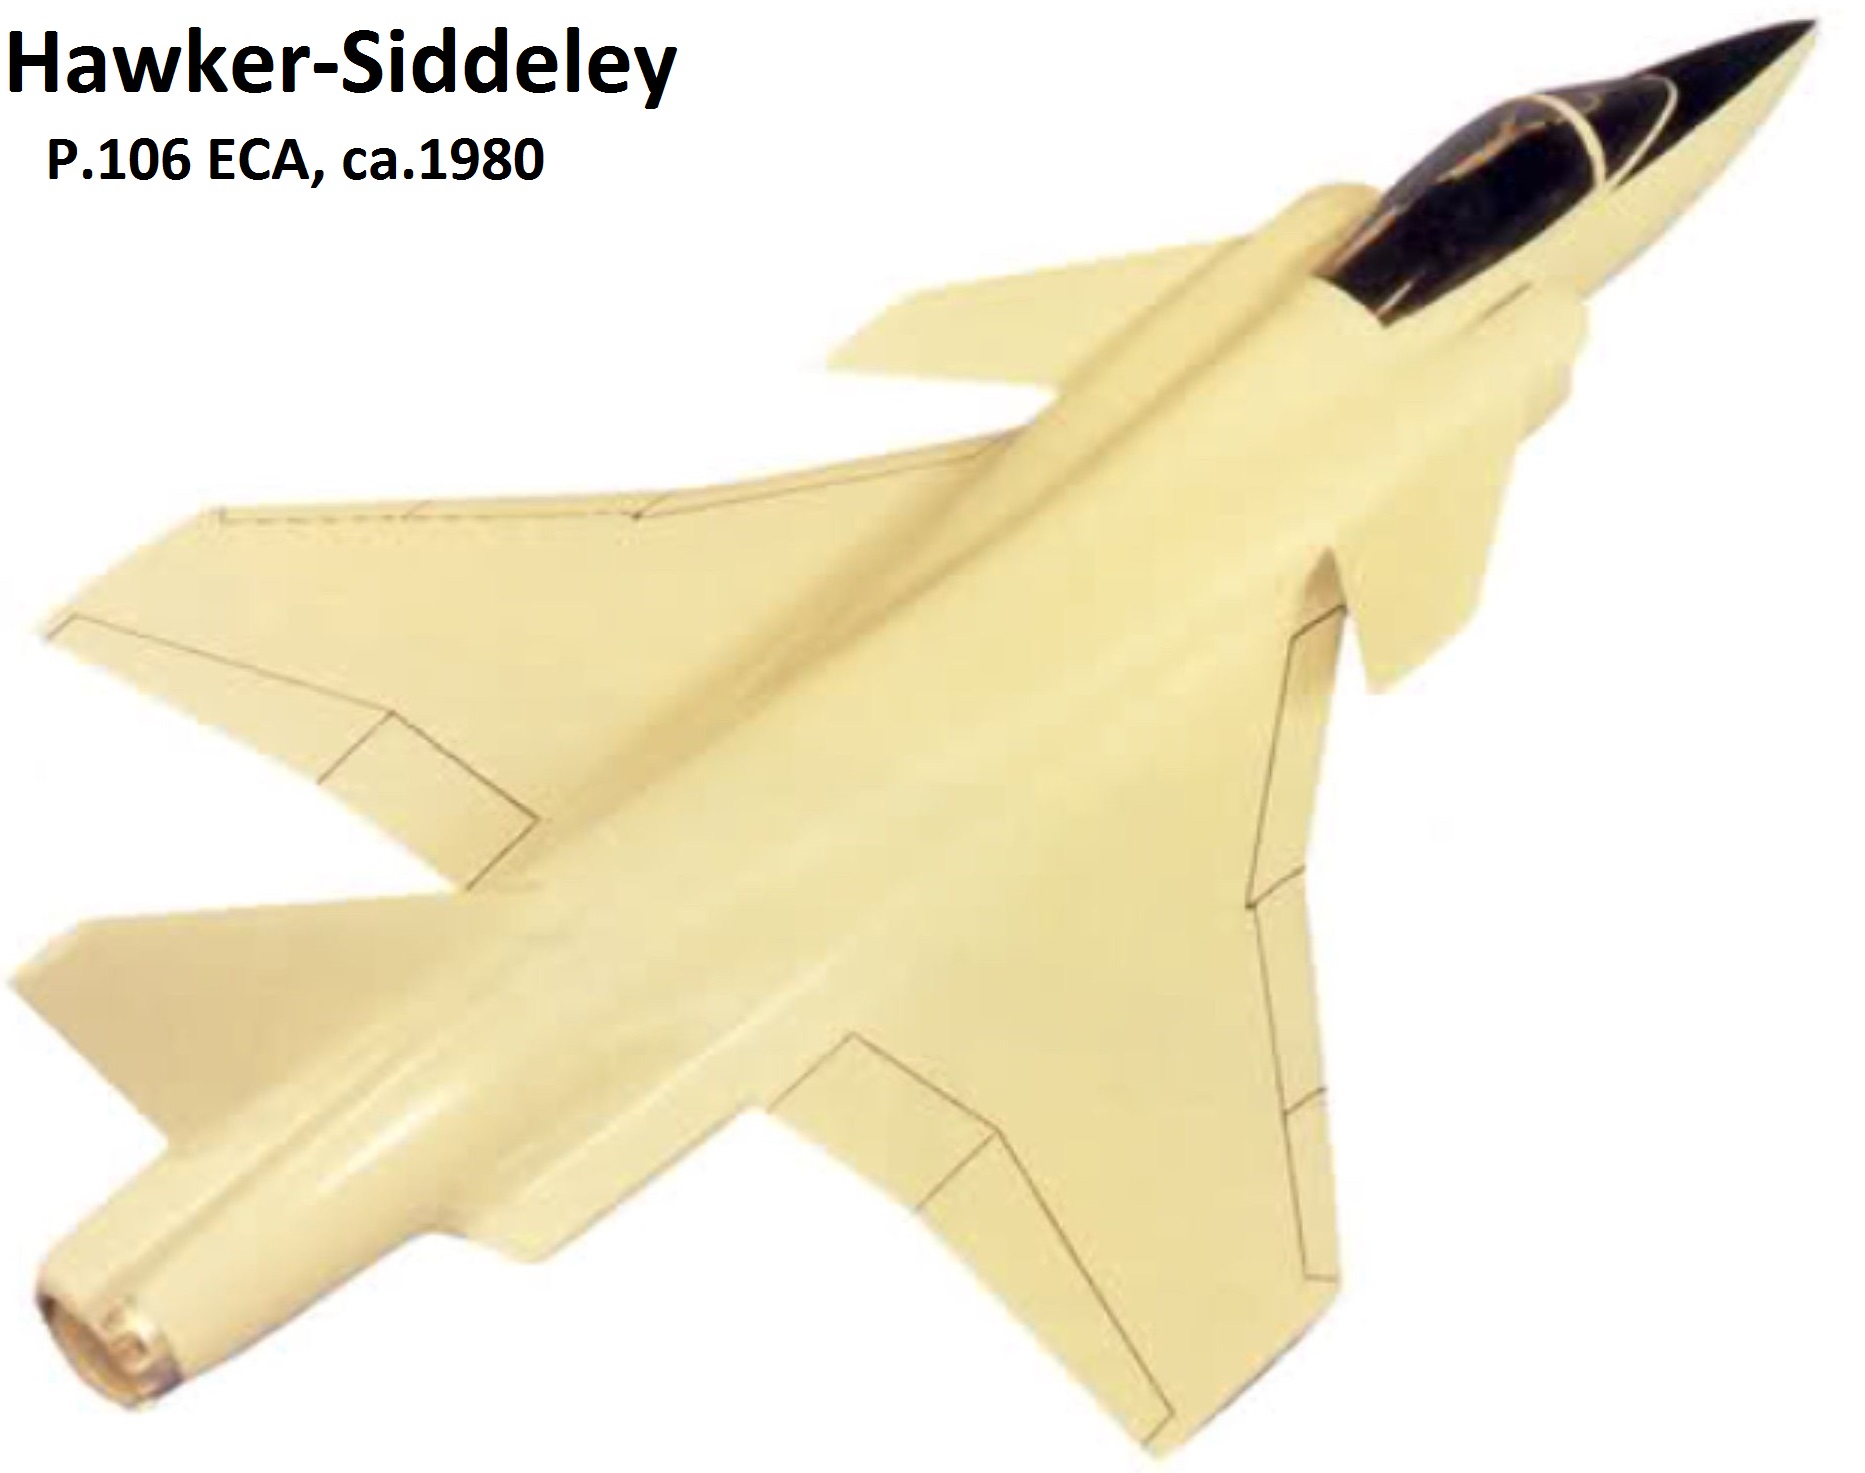 Hawker-Siddeley P.106 ECA.jpg